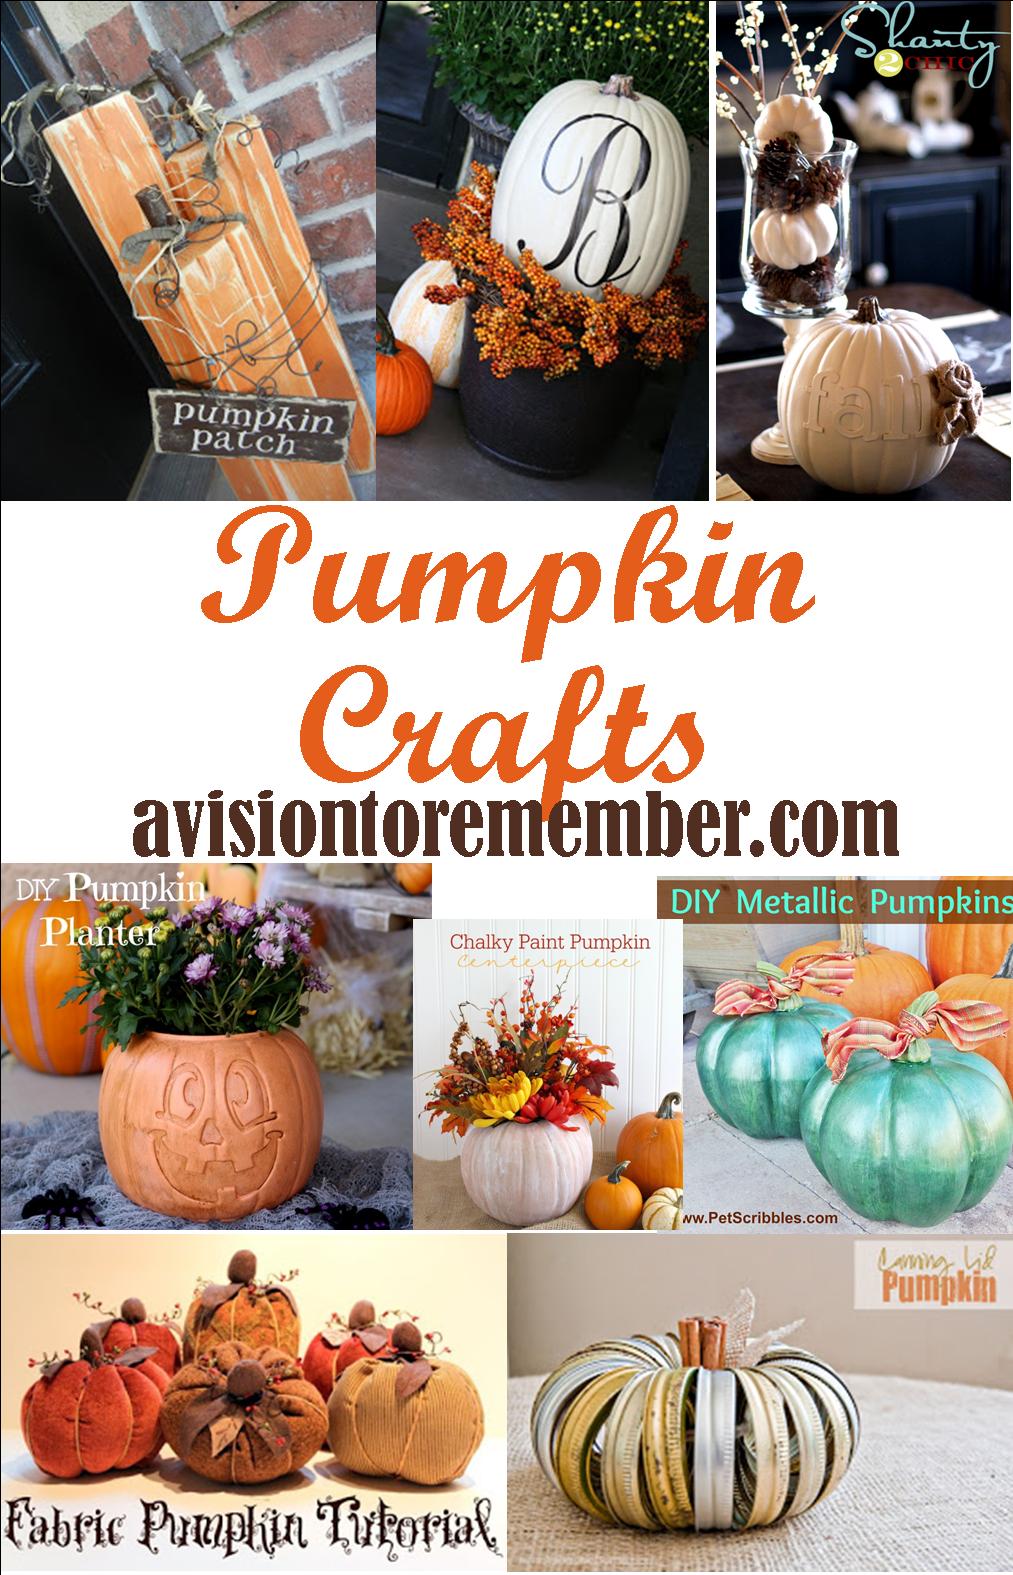 pumpkin crafts ideas on avisiontoremember.com